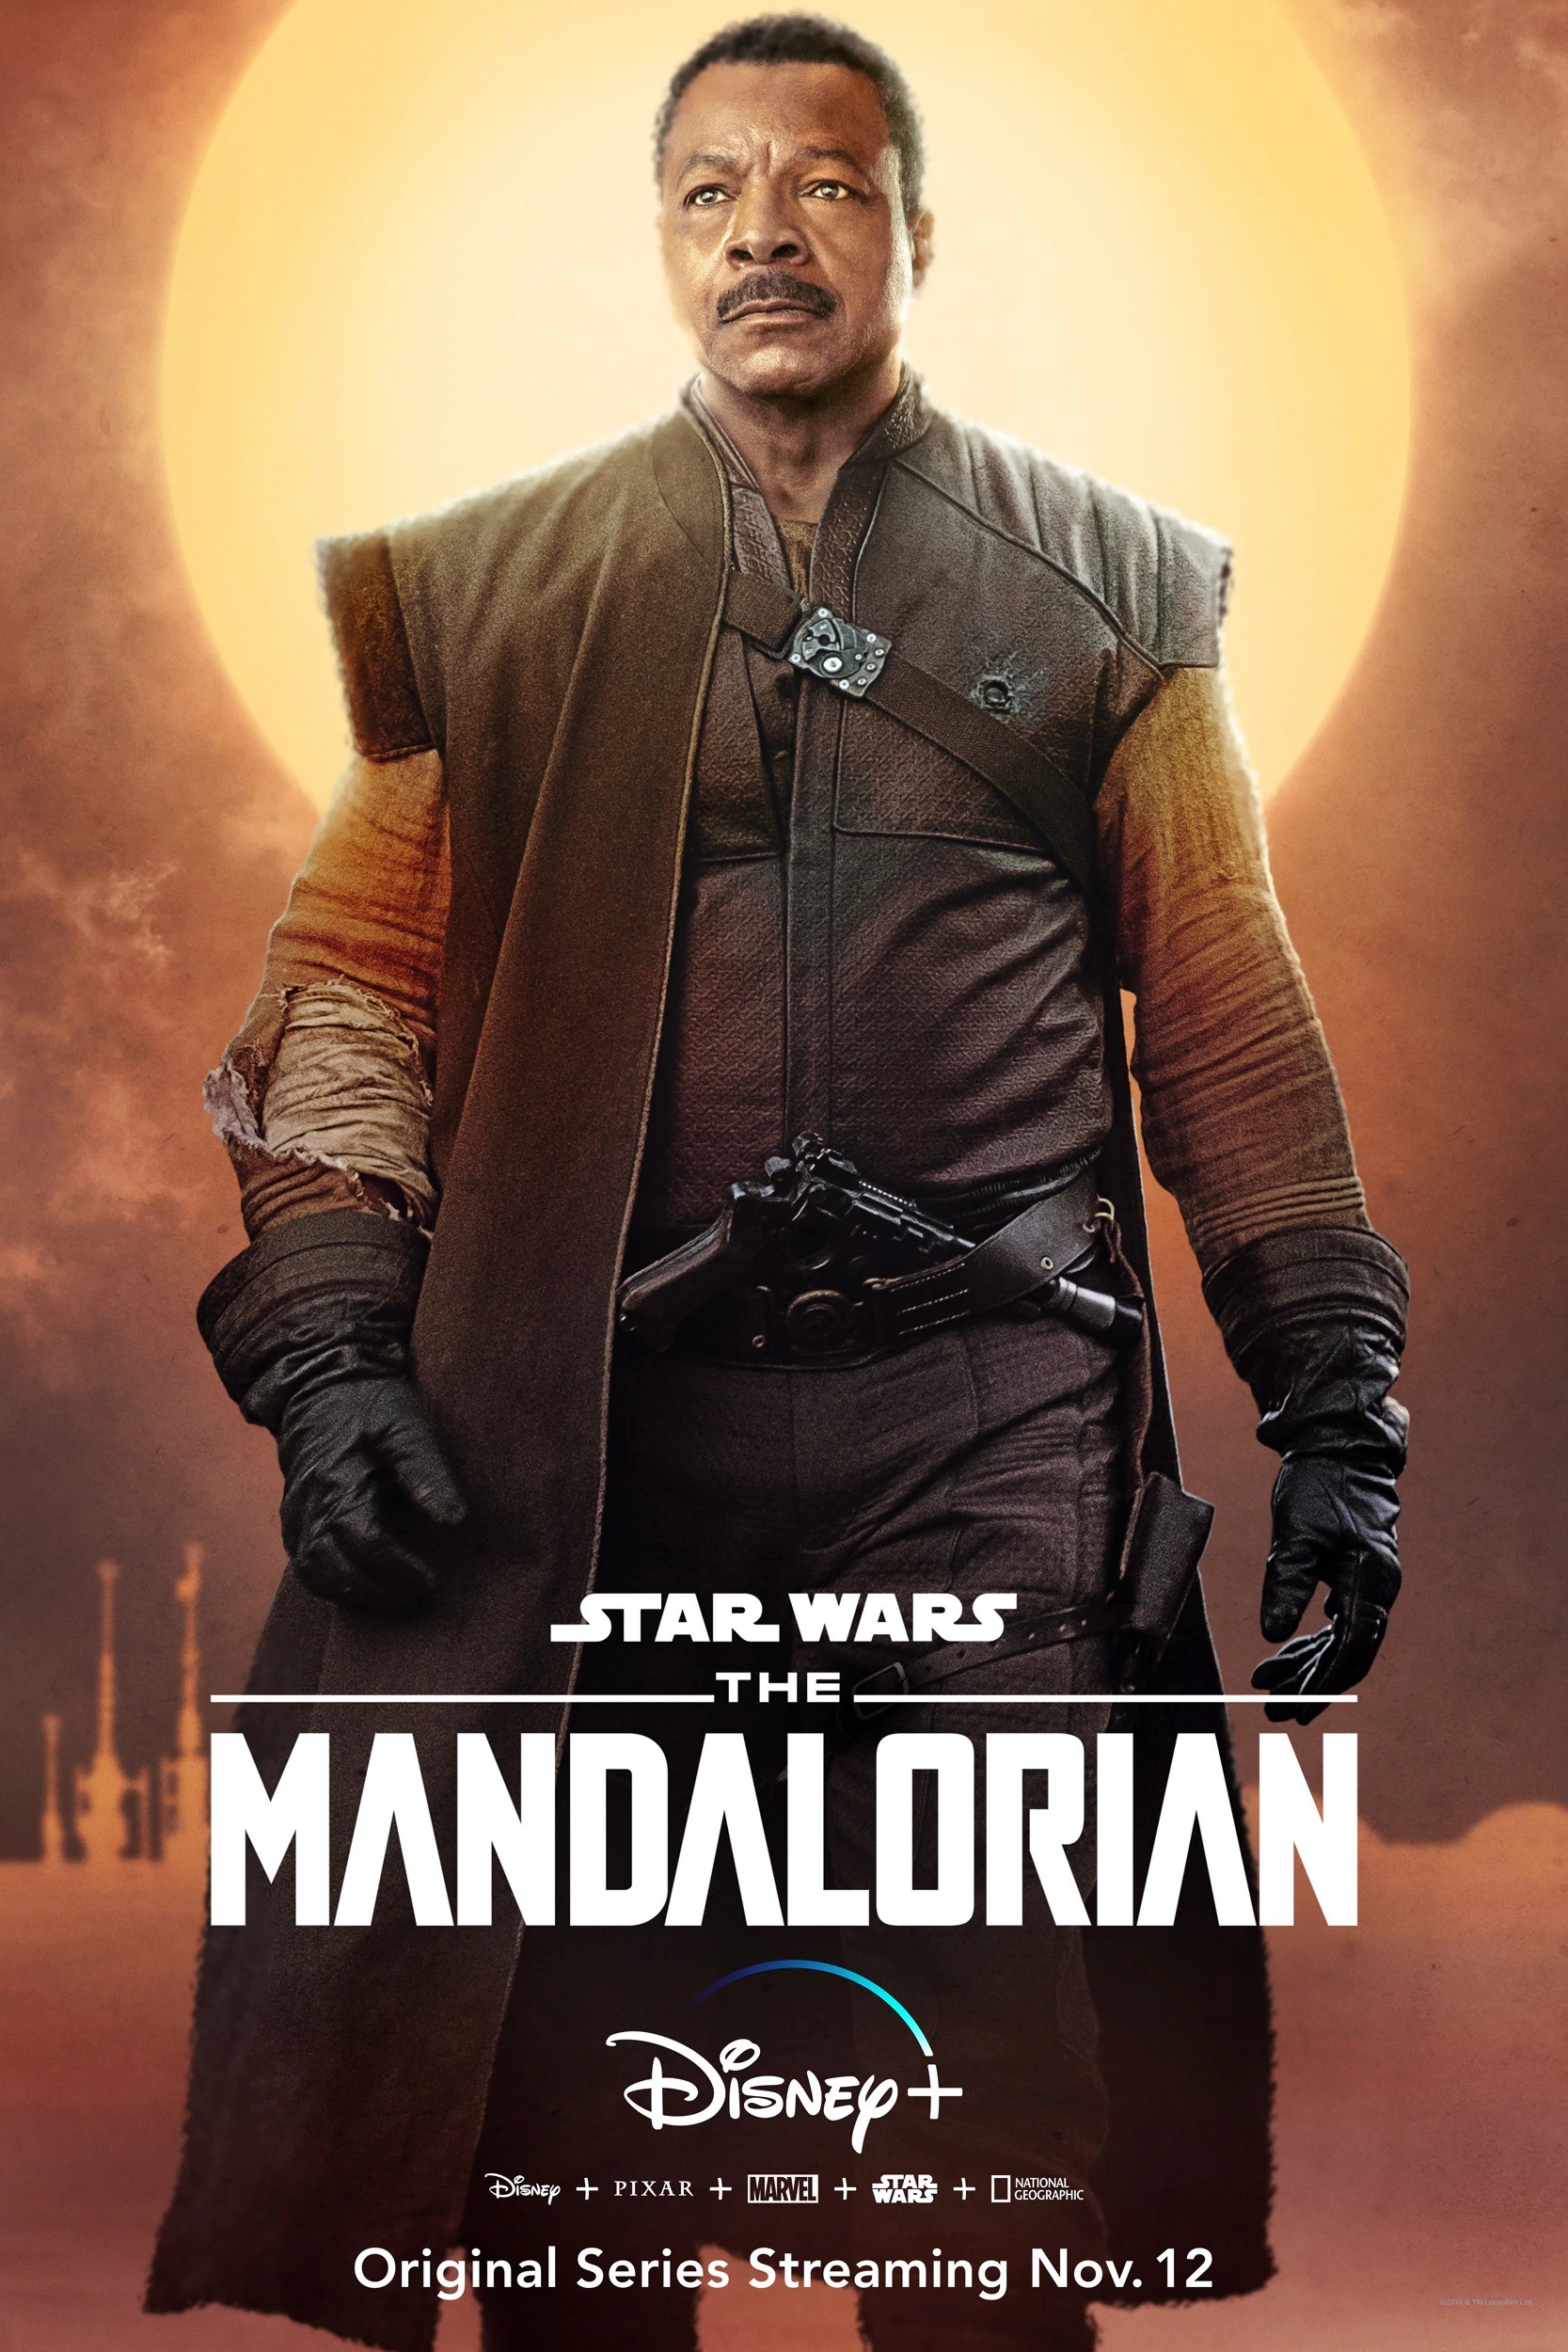 The Mandalorian Season 3 Premiere Early Rotten Tomatoes Score Revealed